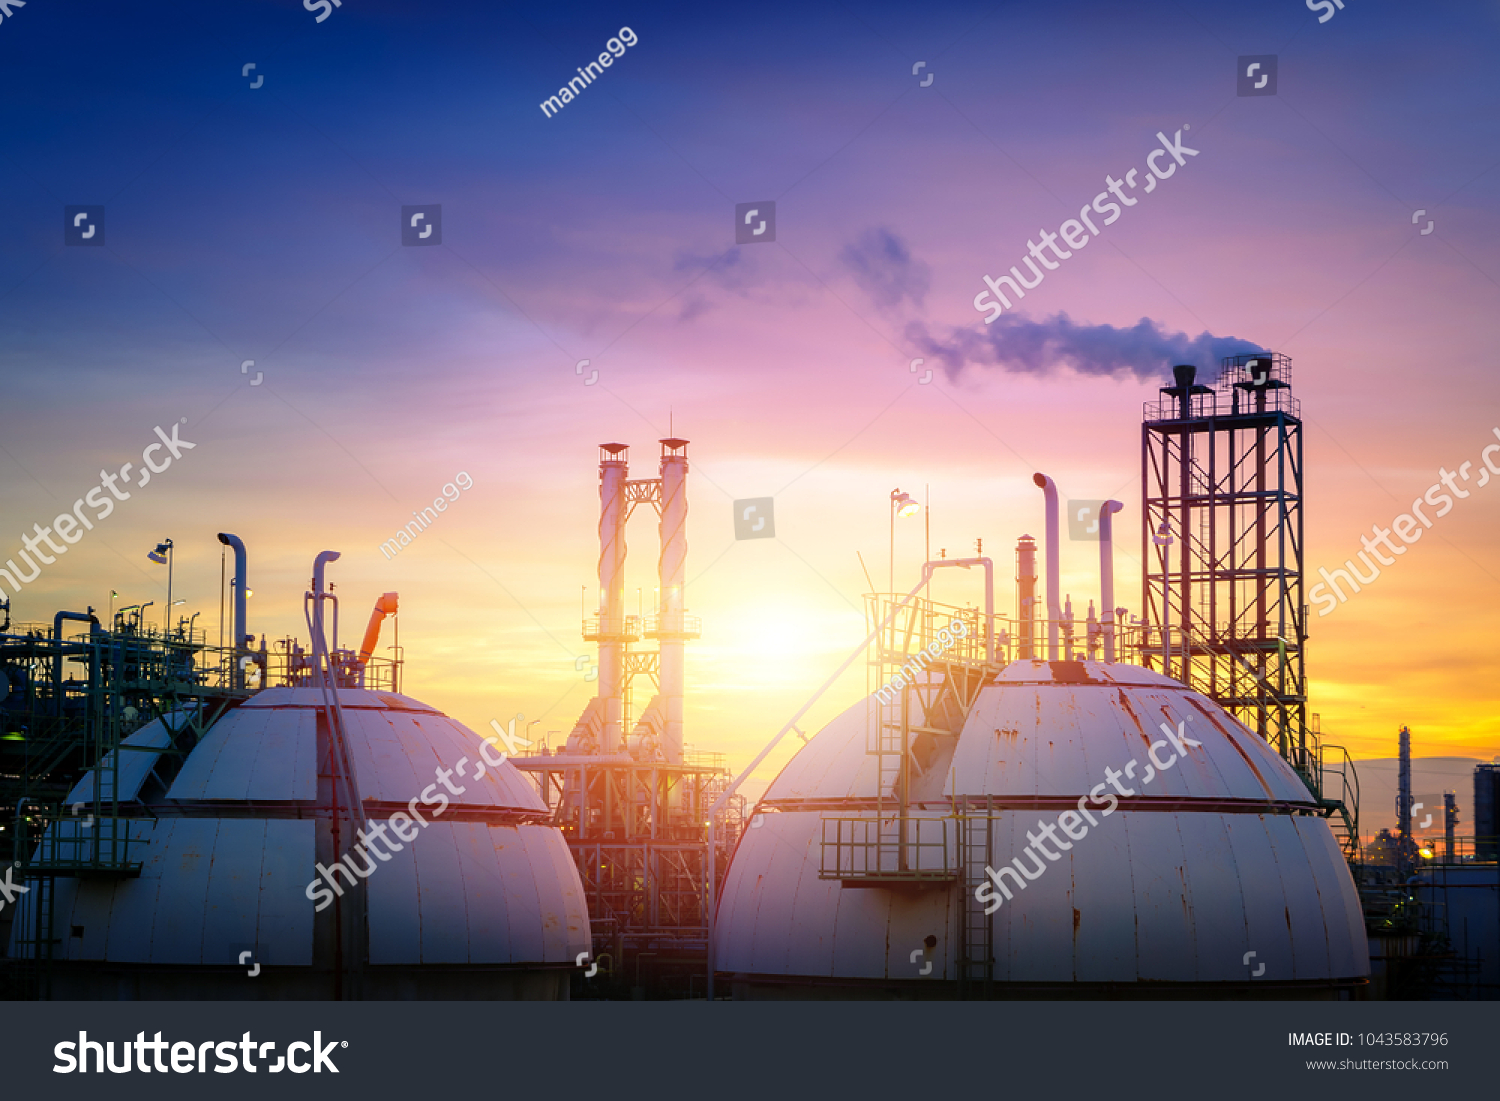 Gas storage sphere tanks with smoke stacks on sky sunset background #1043583796